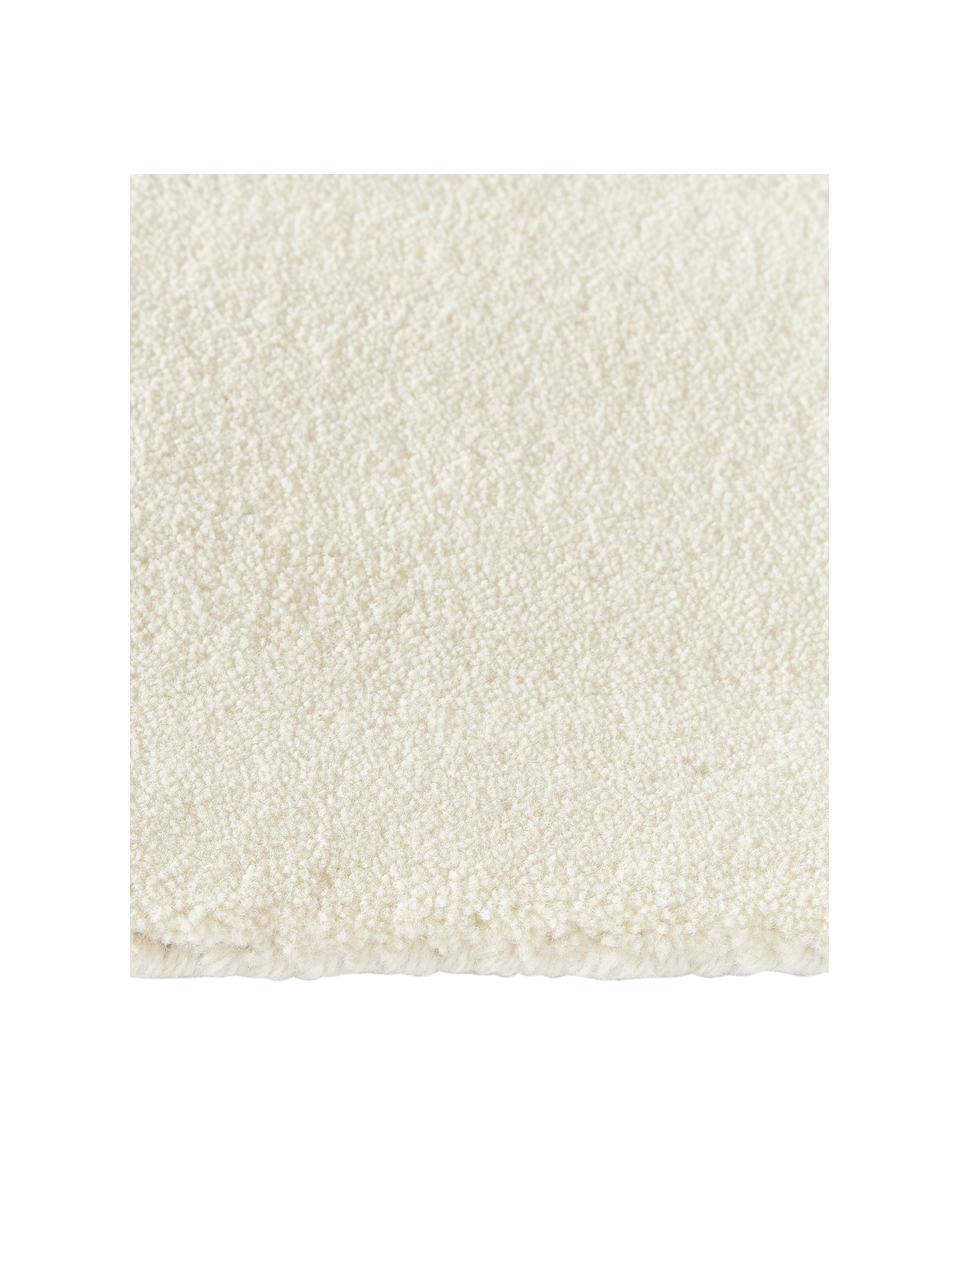 Handgetuft kortpolig wollen vloerkleed Jadie, Bovenzijde: 100% wol, RWS-gecertifice, Crèmewit, B 80 x L 150 cm (maat XS)